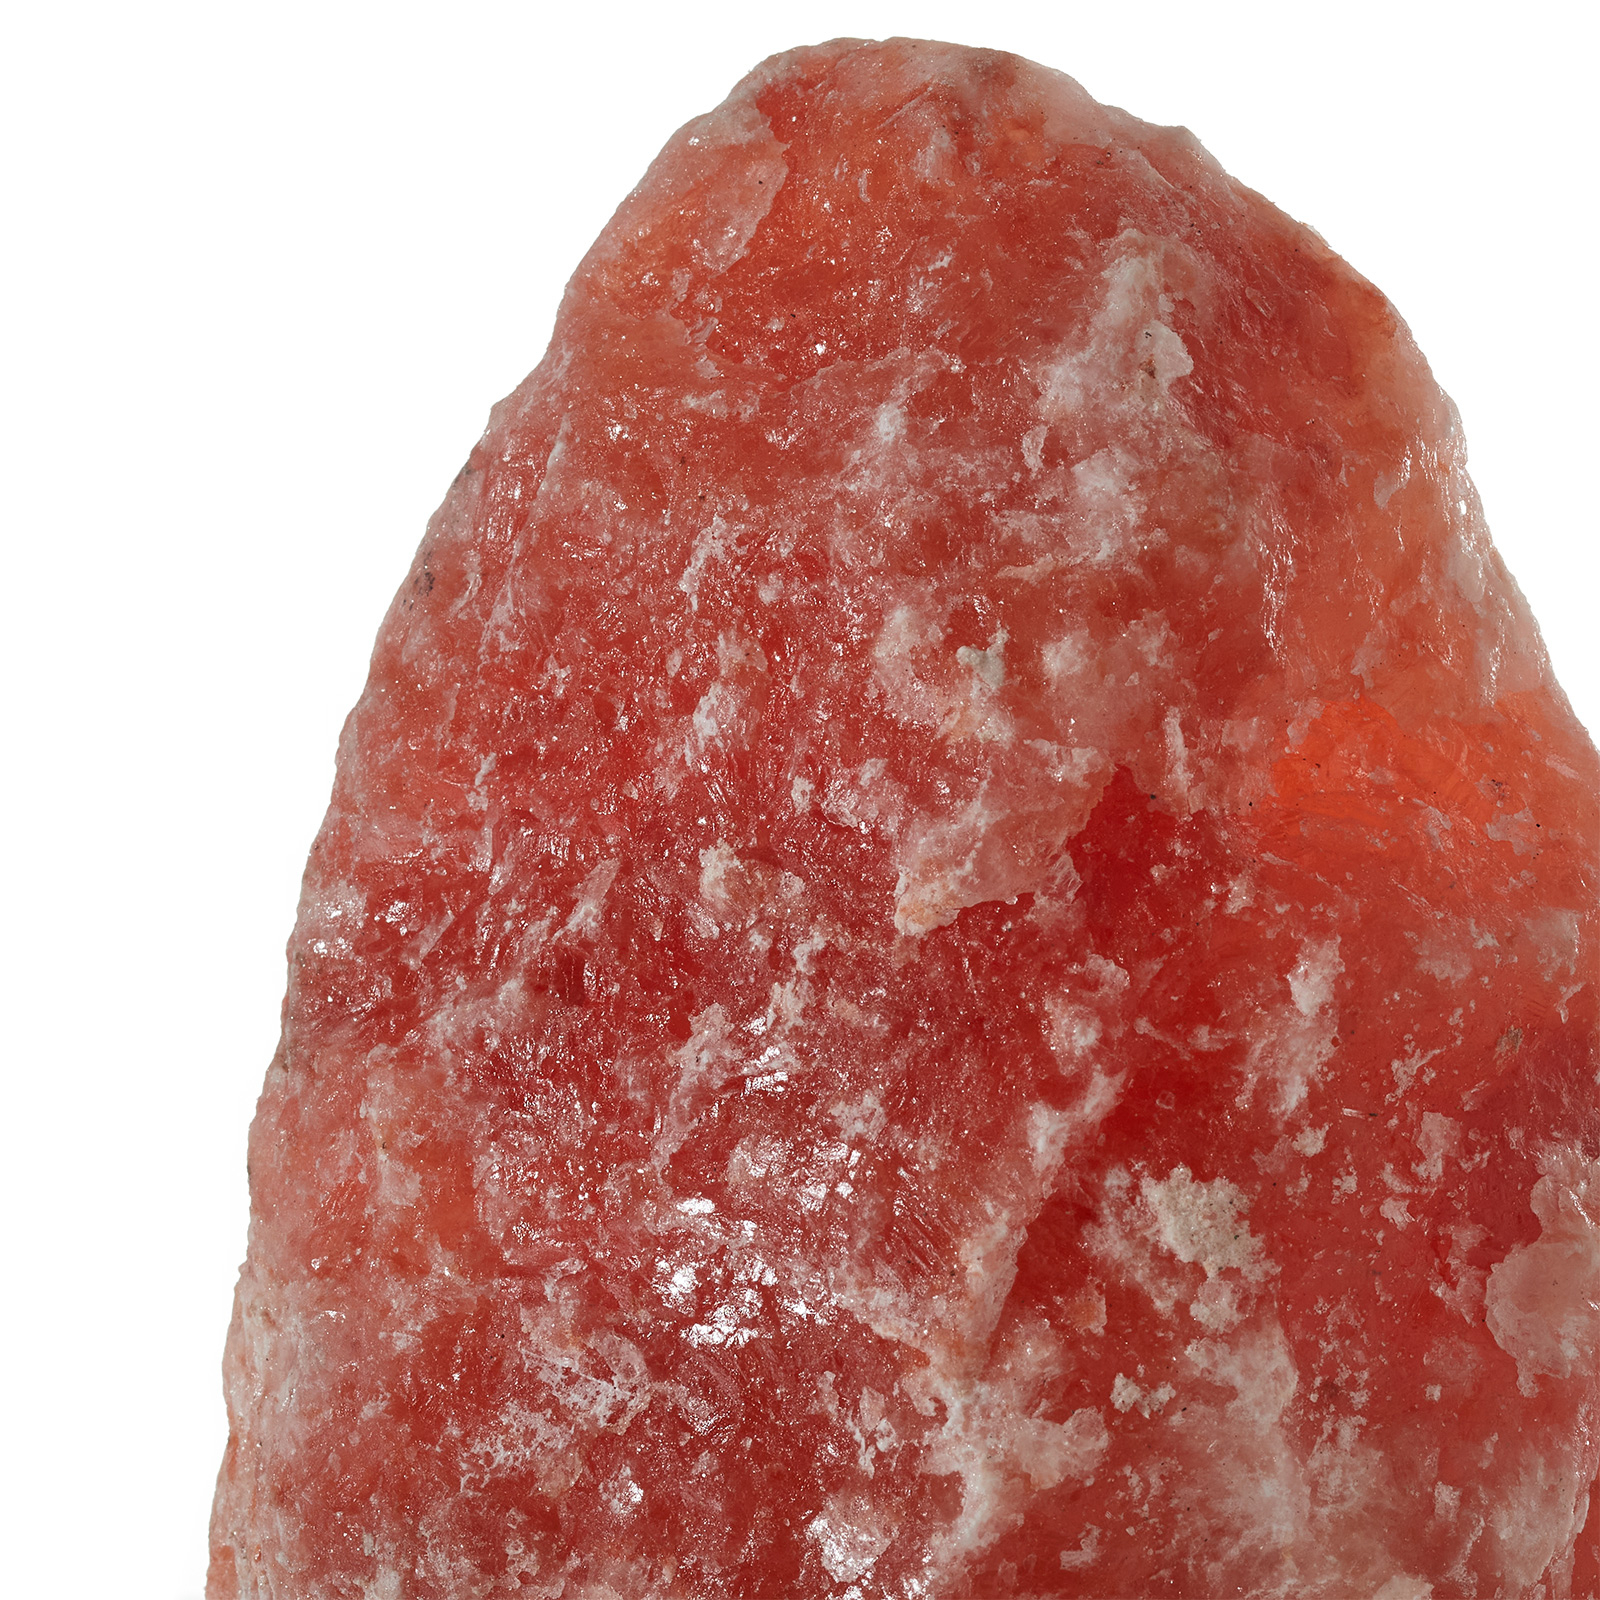 ROCK - Candeeiro de cristal de sal 4-6 kg, altura aprox. 23 cm